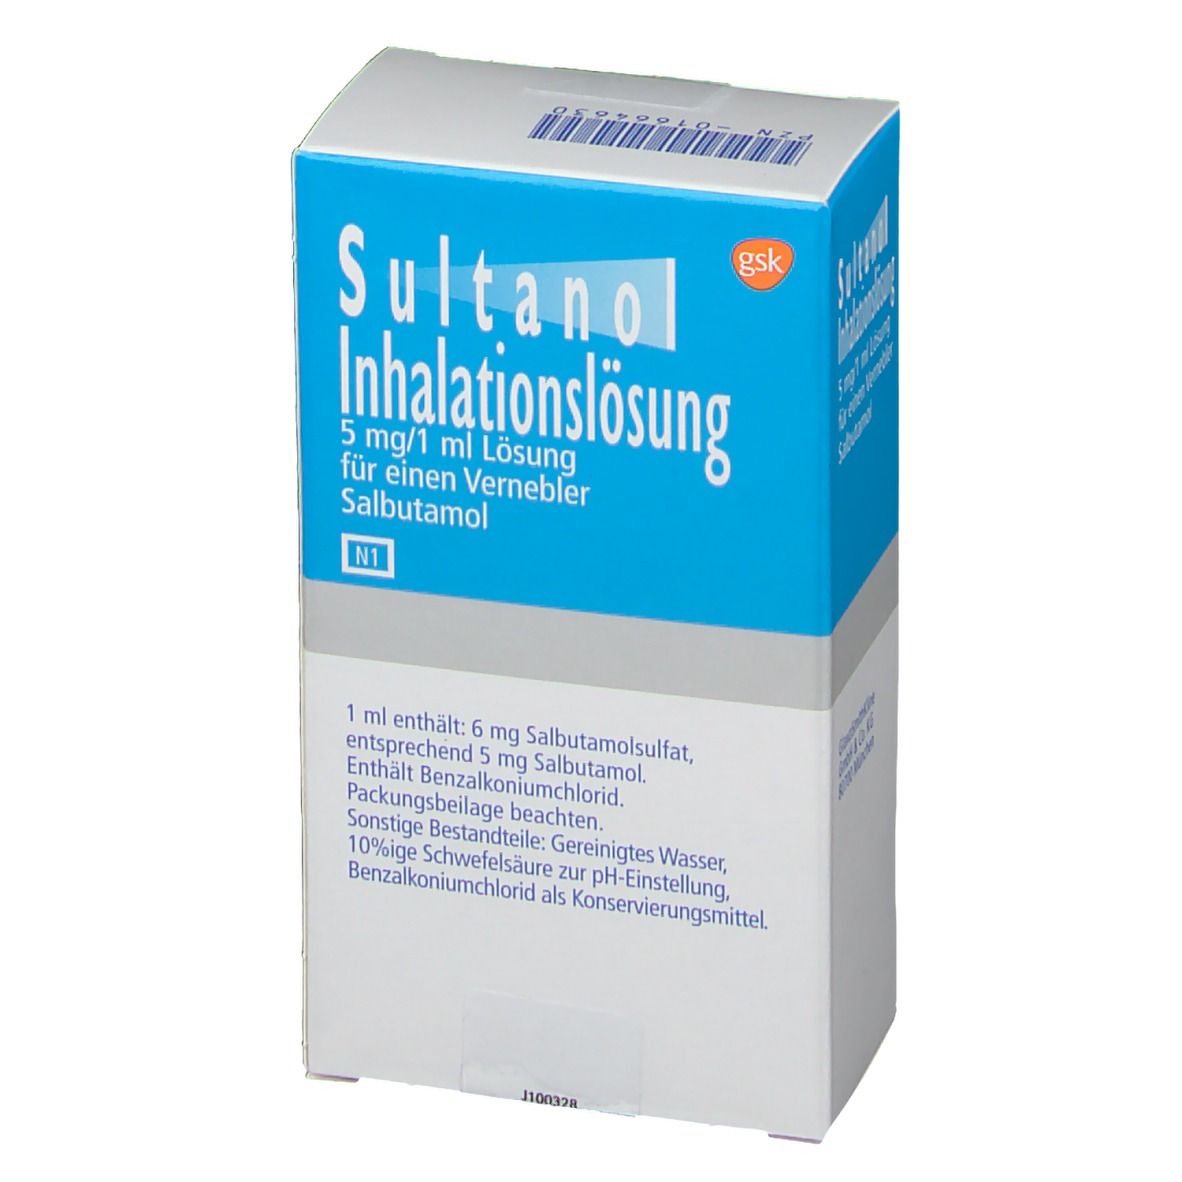 Sultanol® 5 mg/1 ml